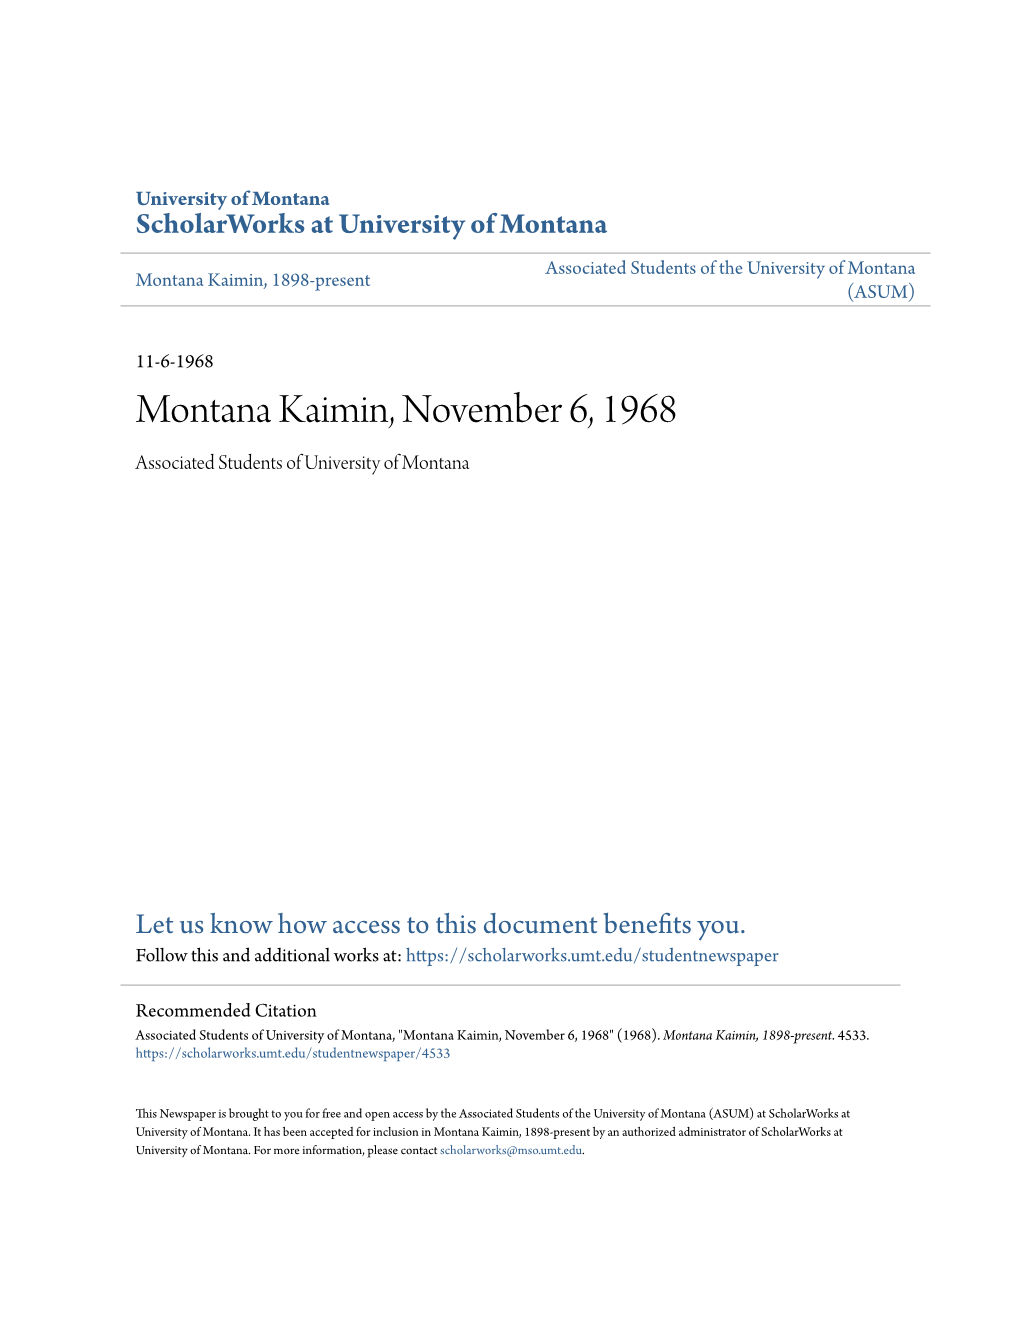 Montana Kaimin, November 6, 1968 Associated Students of University of Montana